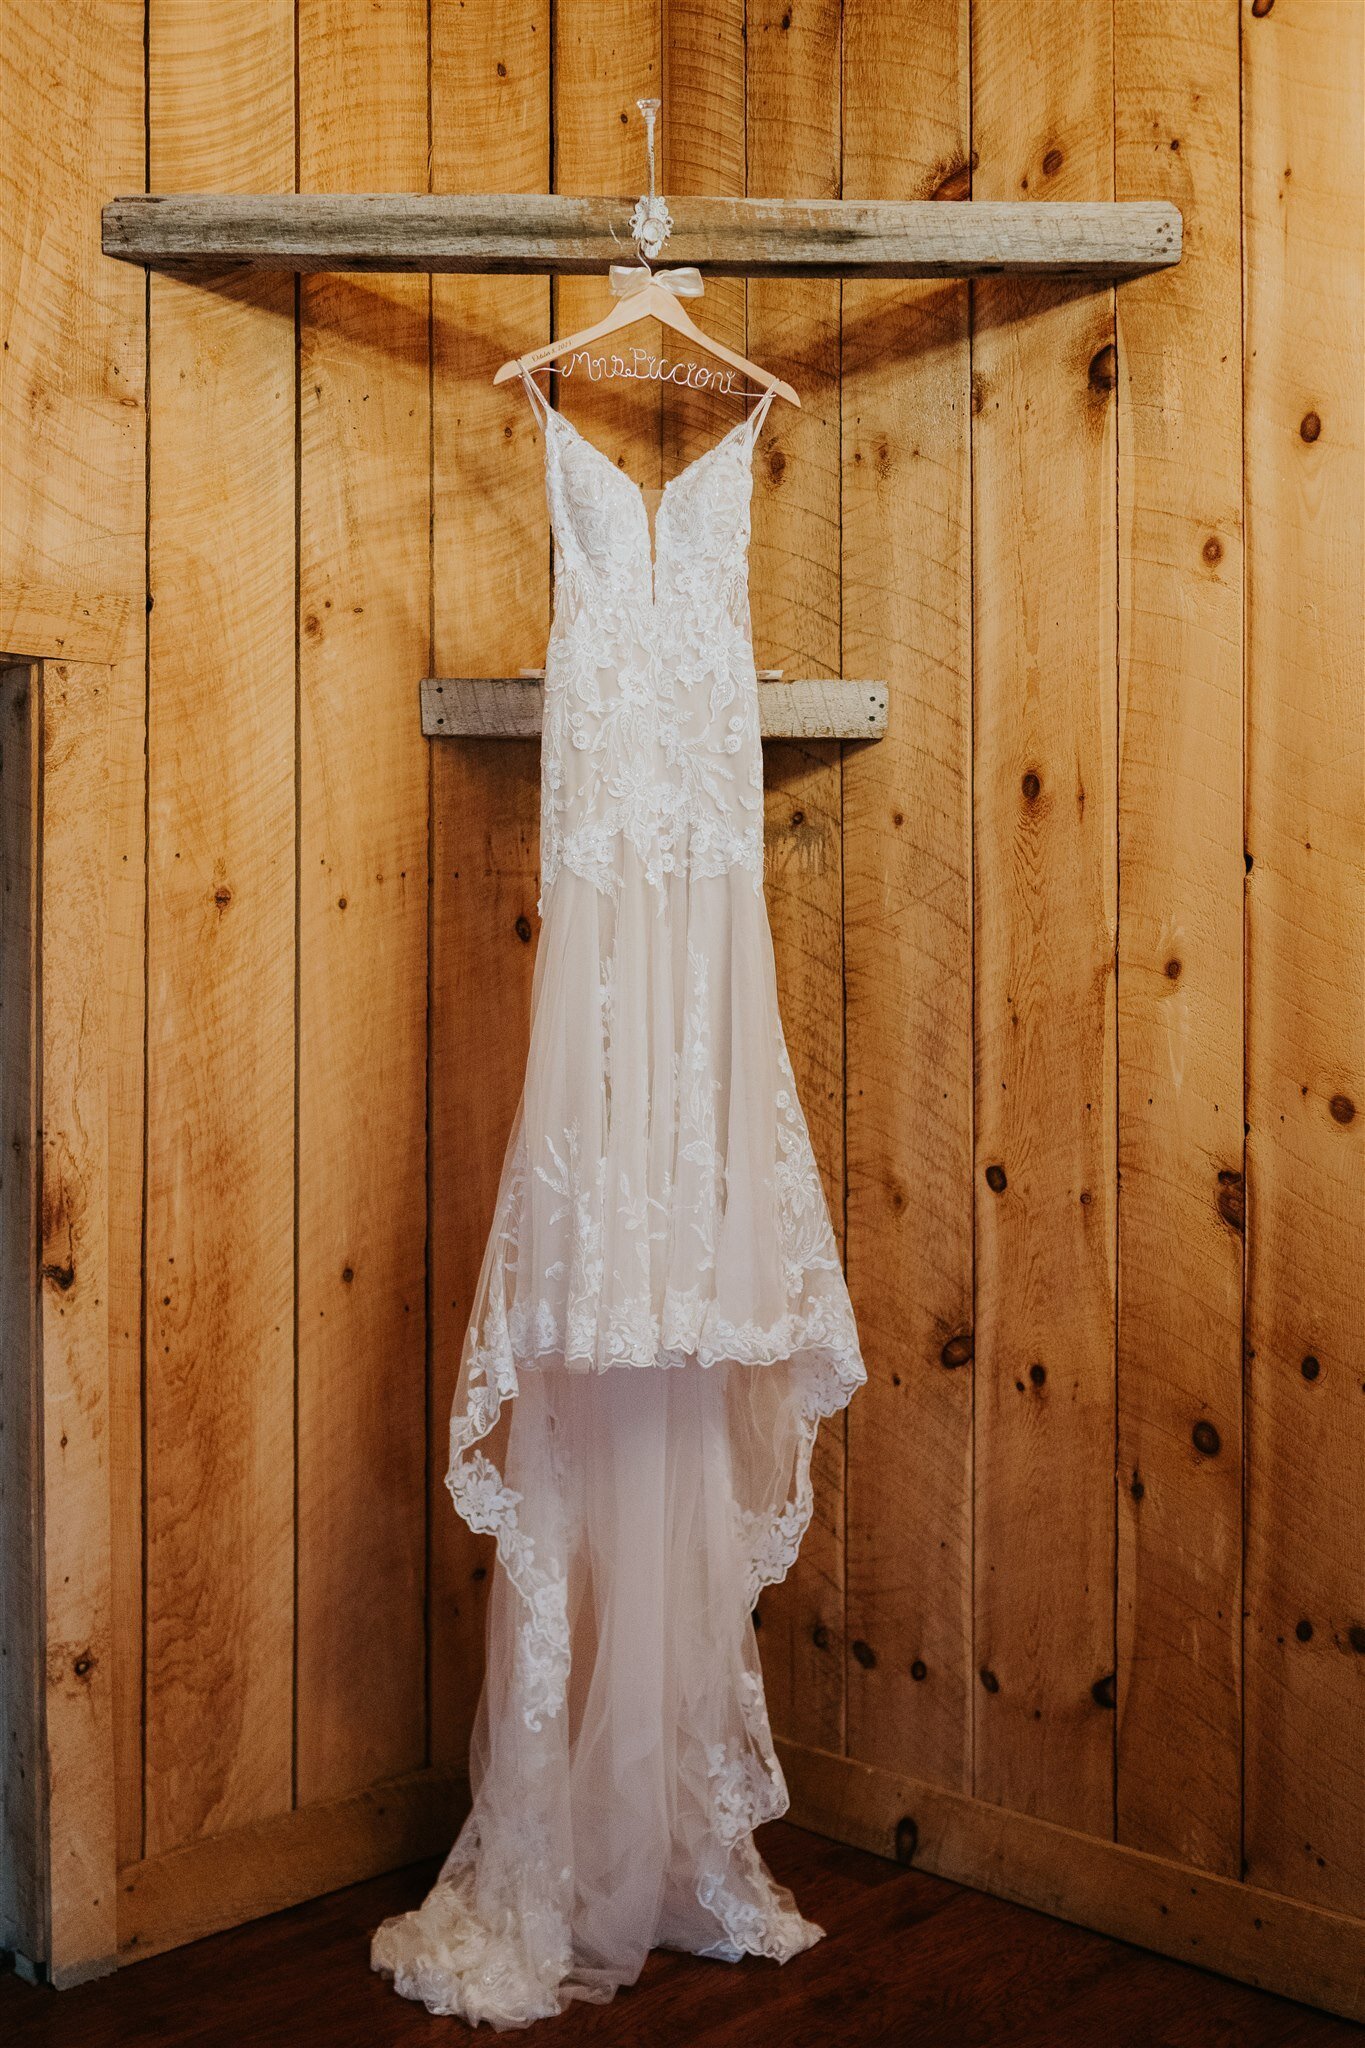 dress-hanging-wood-barn